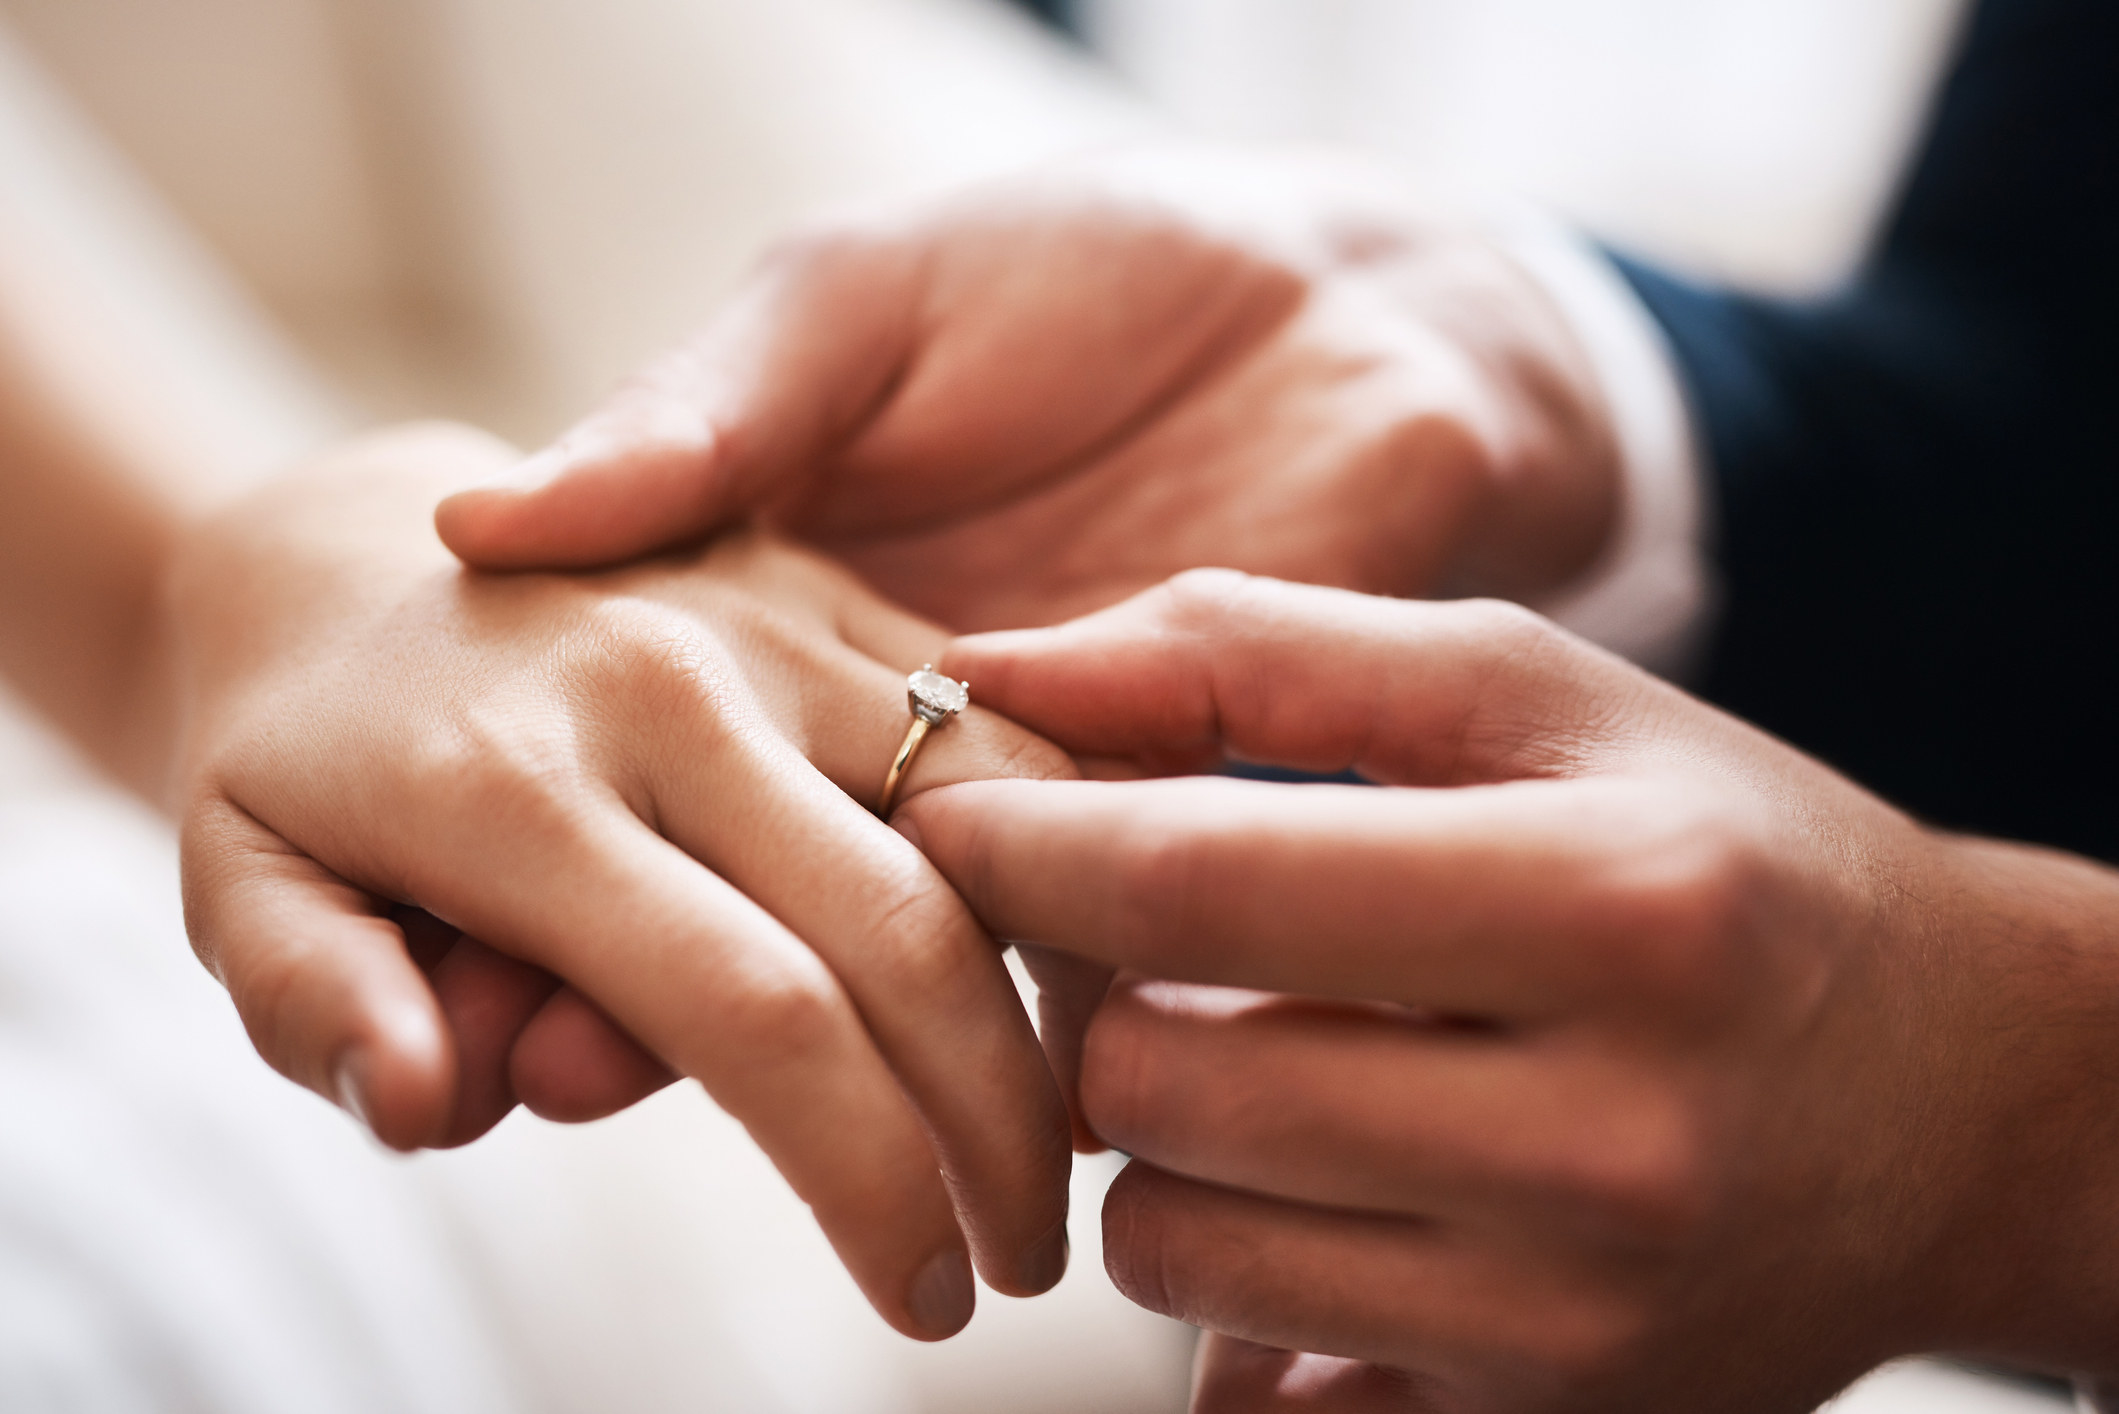 Man puts wedding ring on woman&#x27;s hand